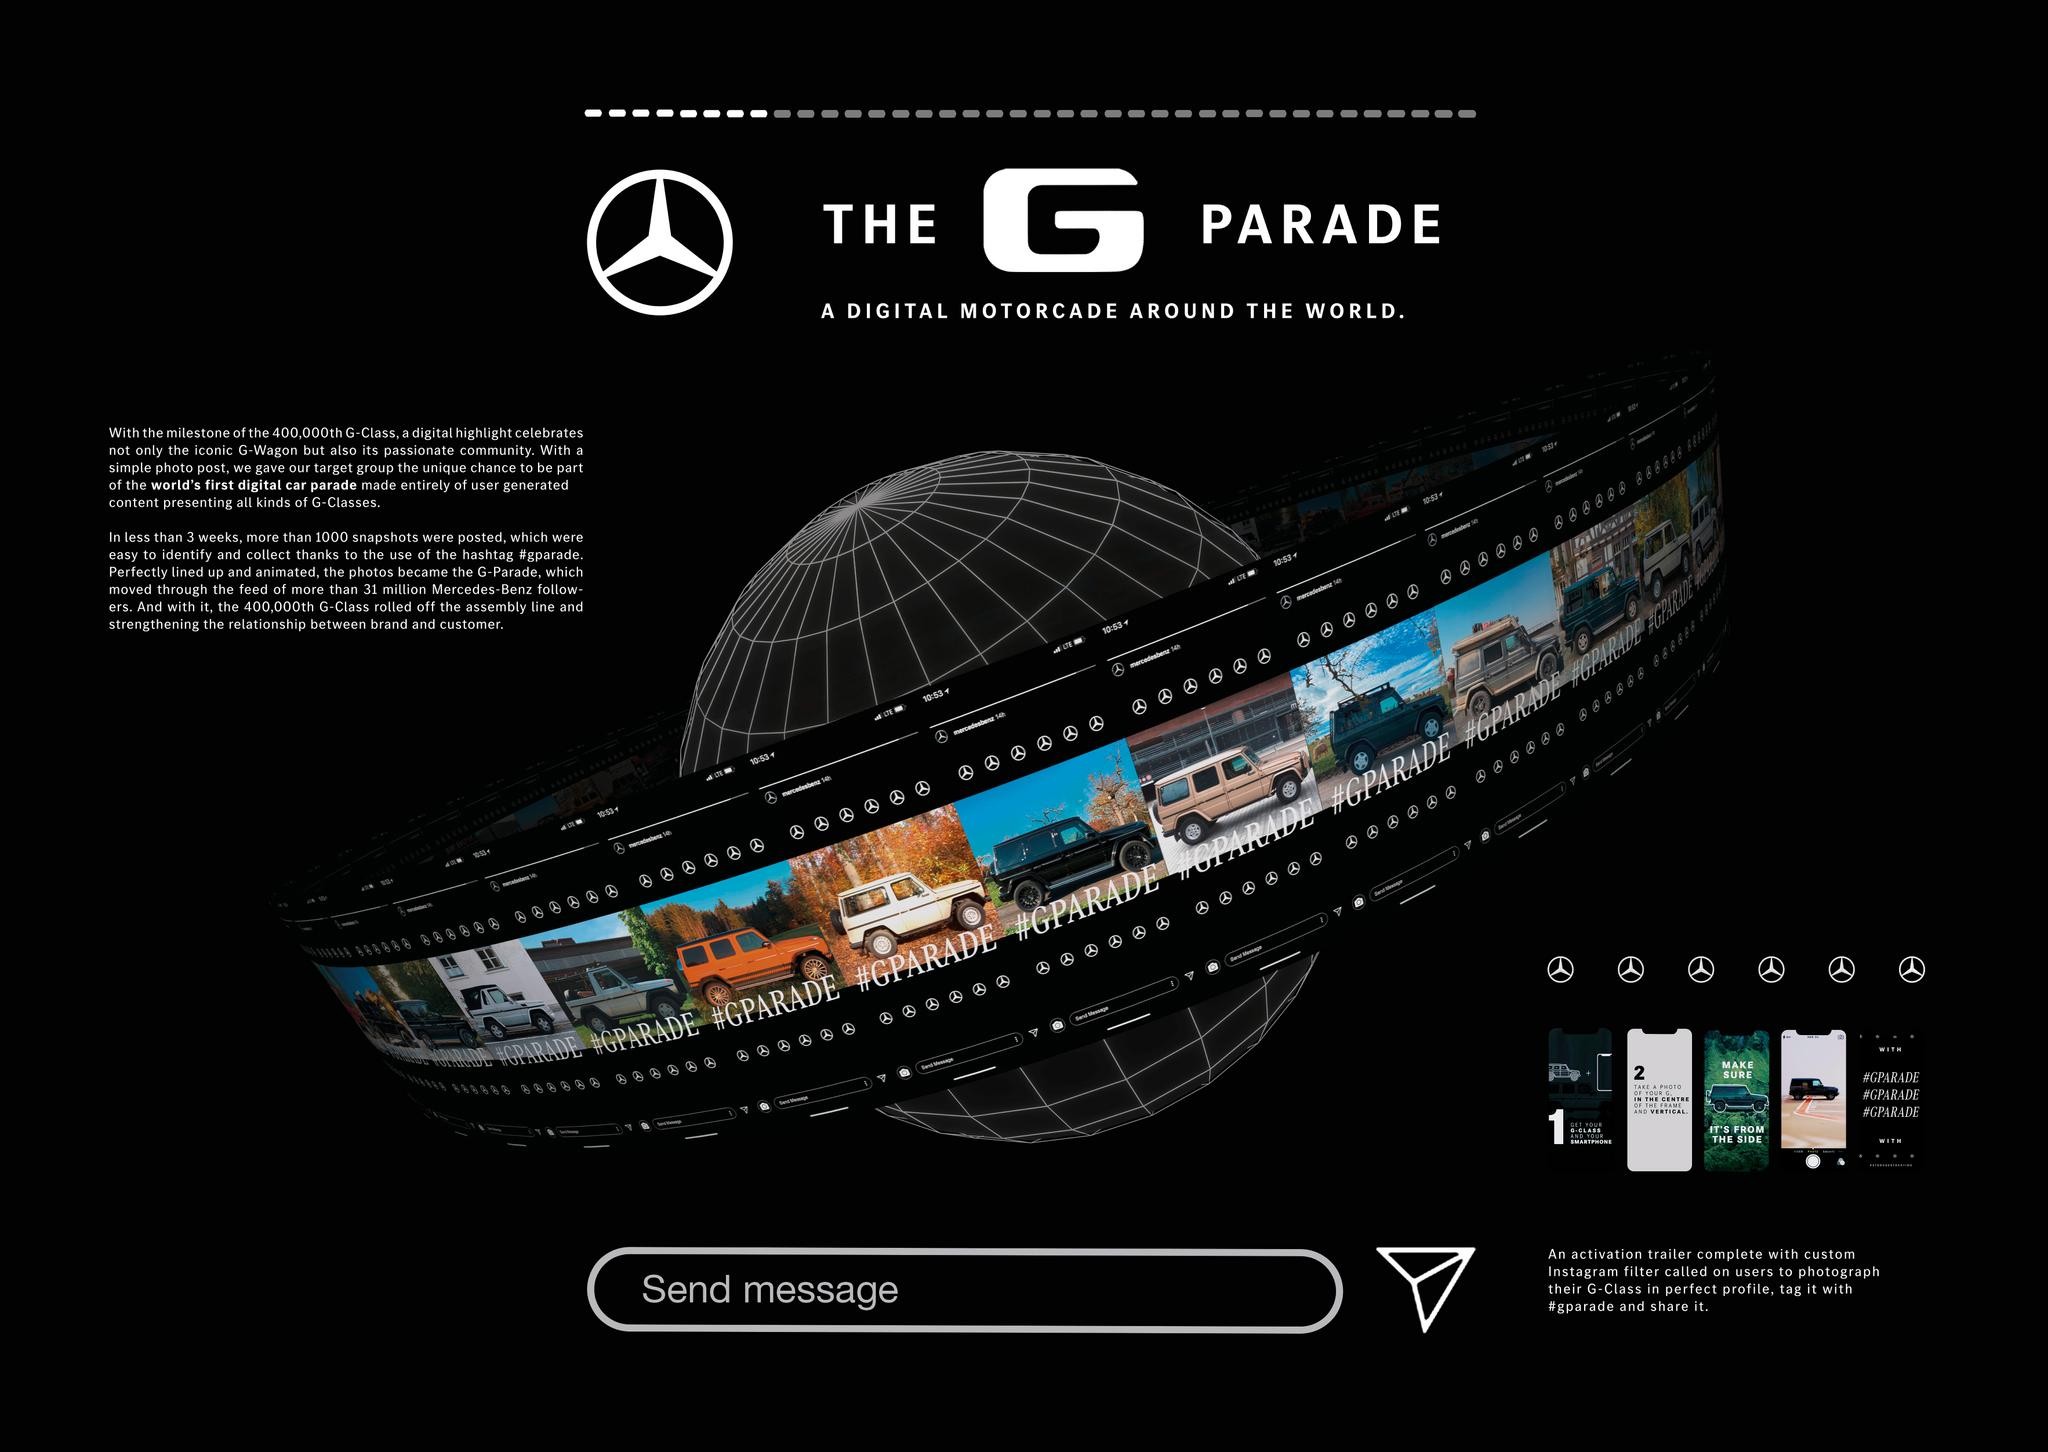 THE G-PARADE - A digital motorcade around the world.